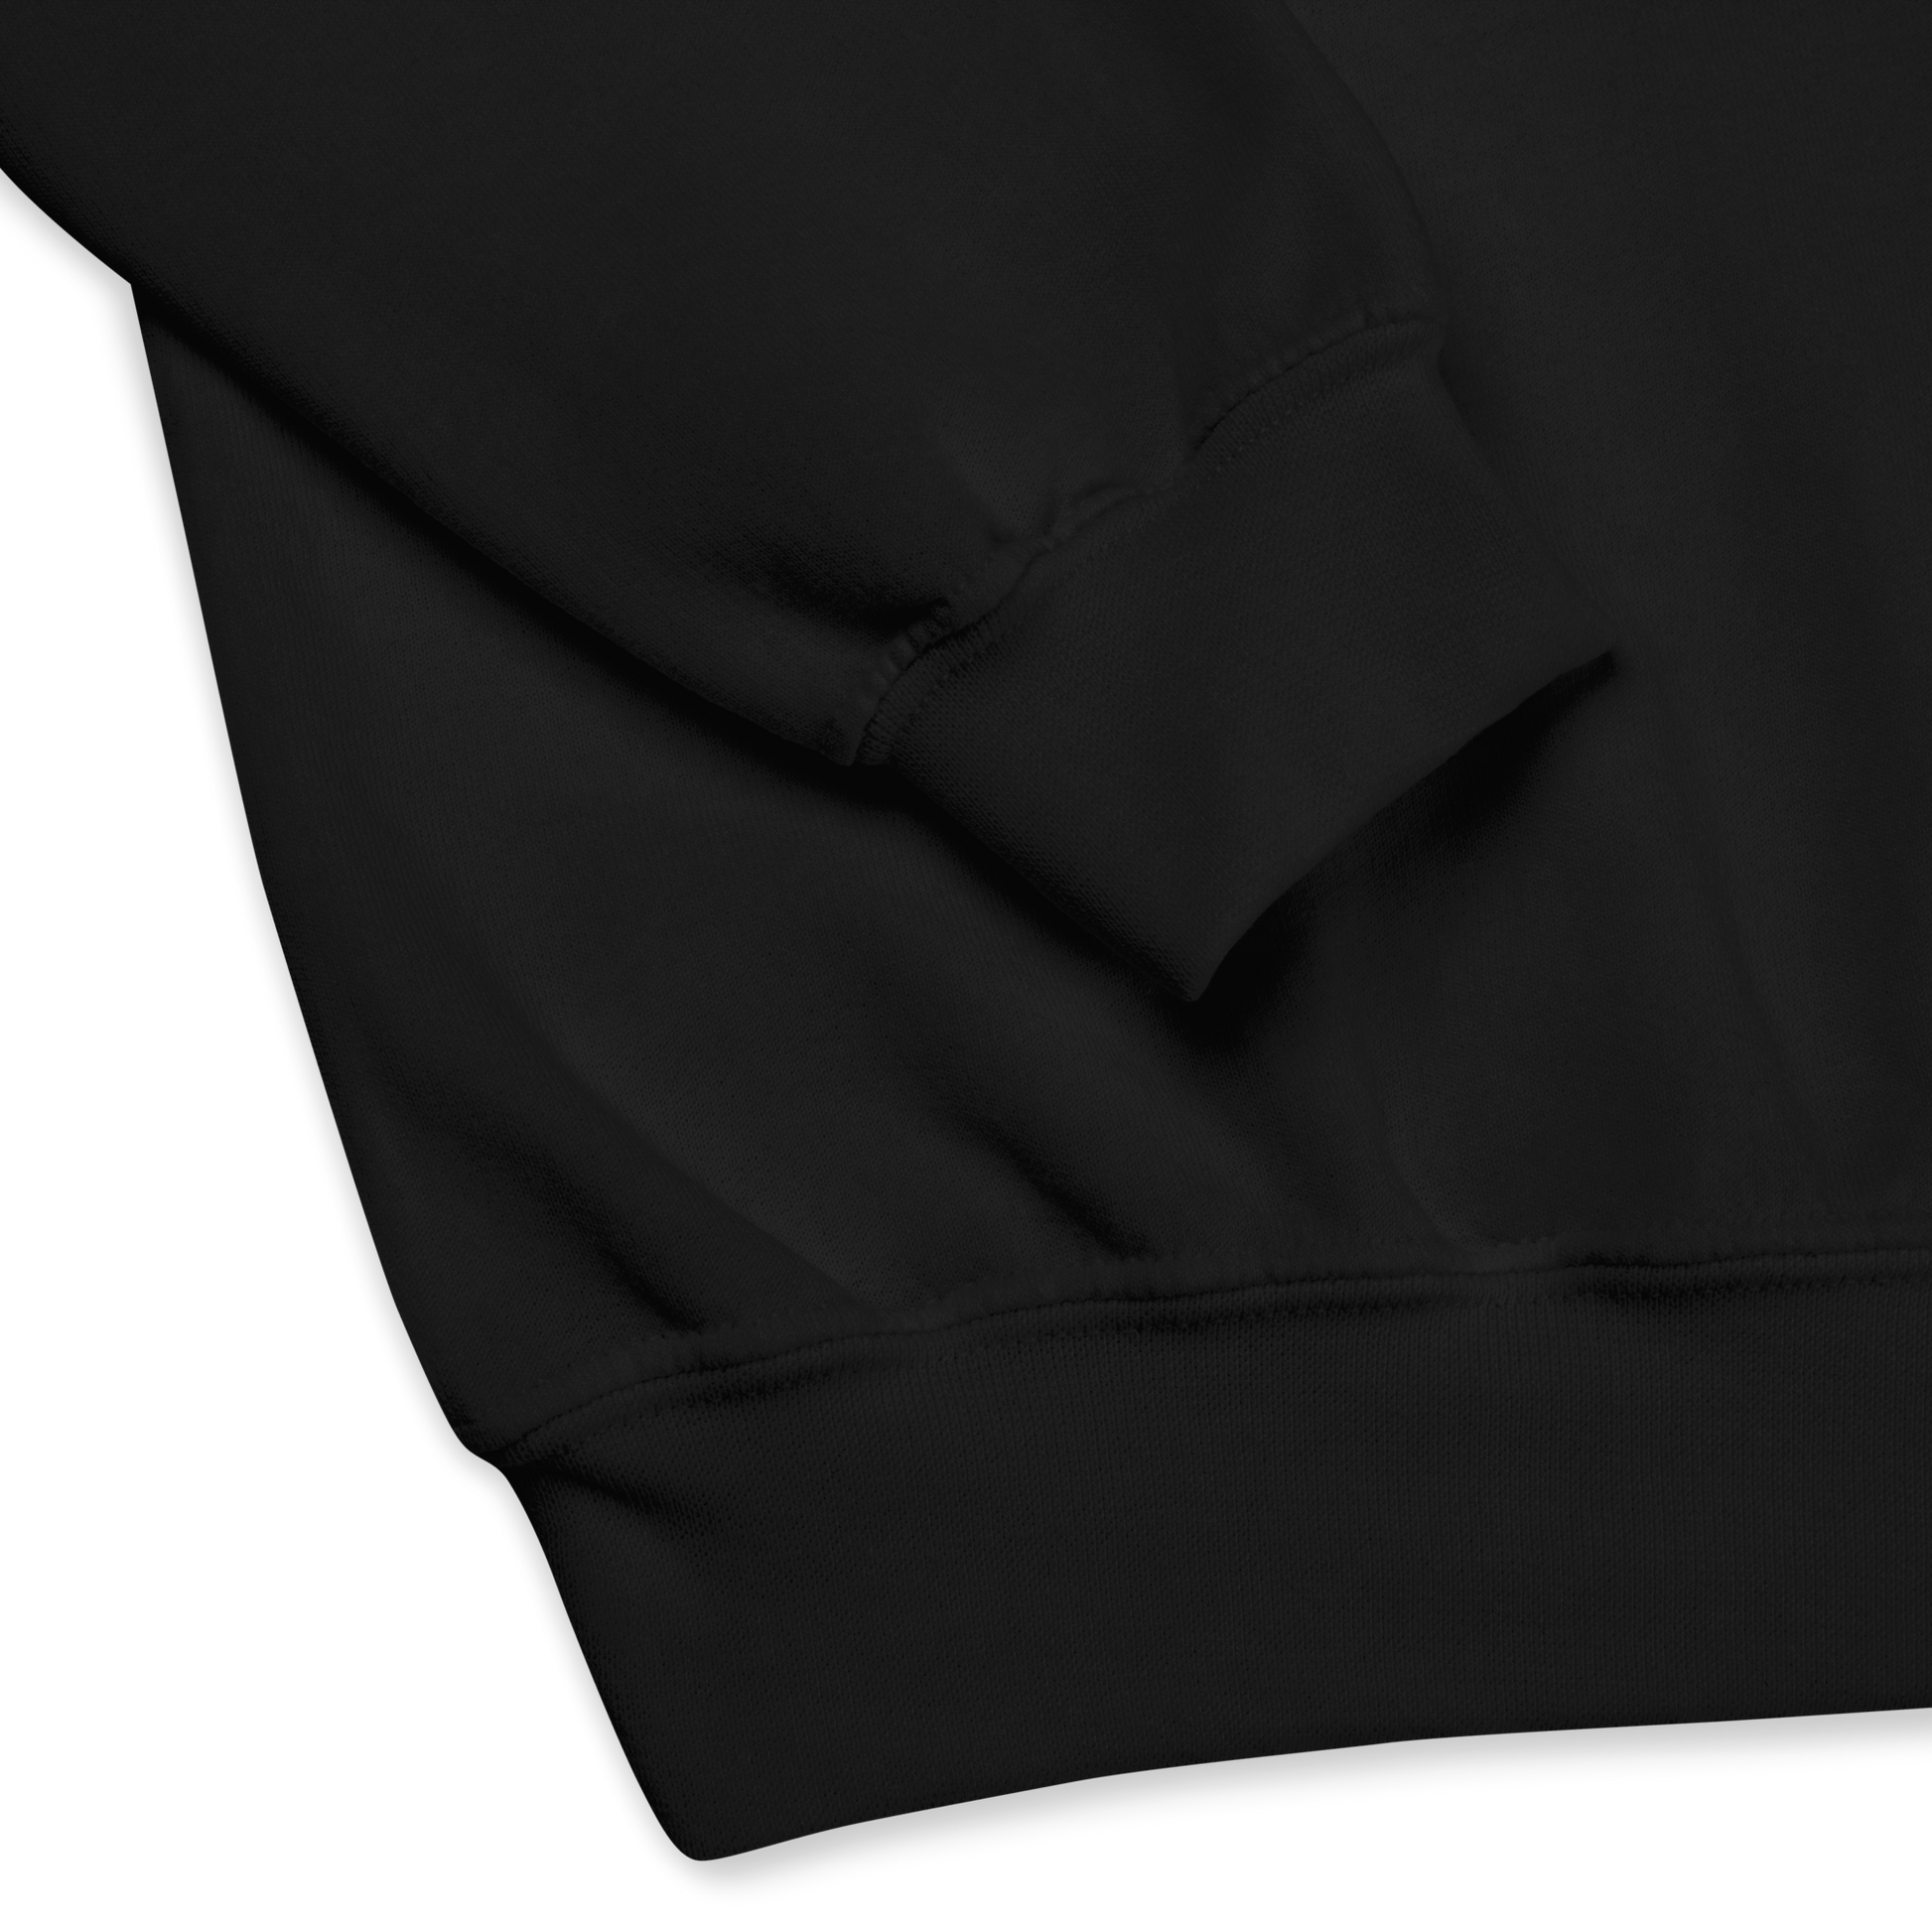 Product details of a Black Sweatshirt - Boozy Fox